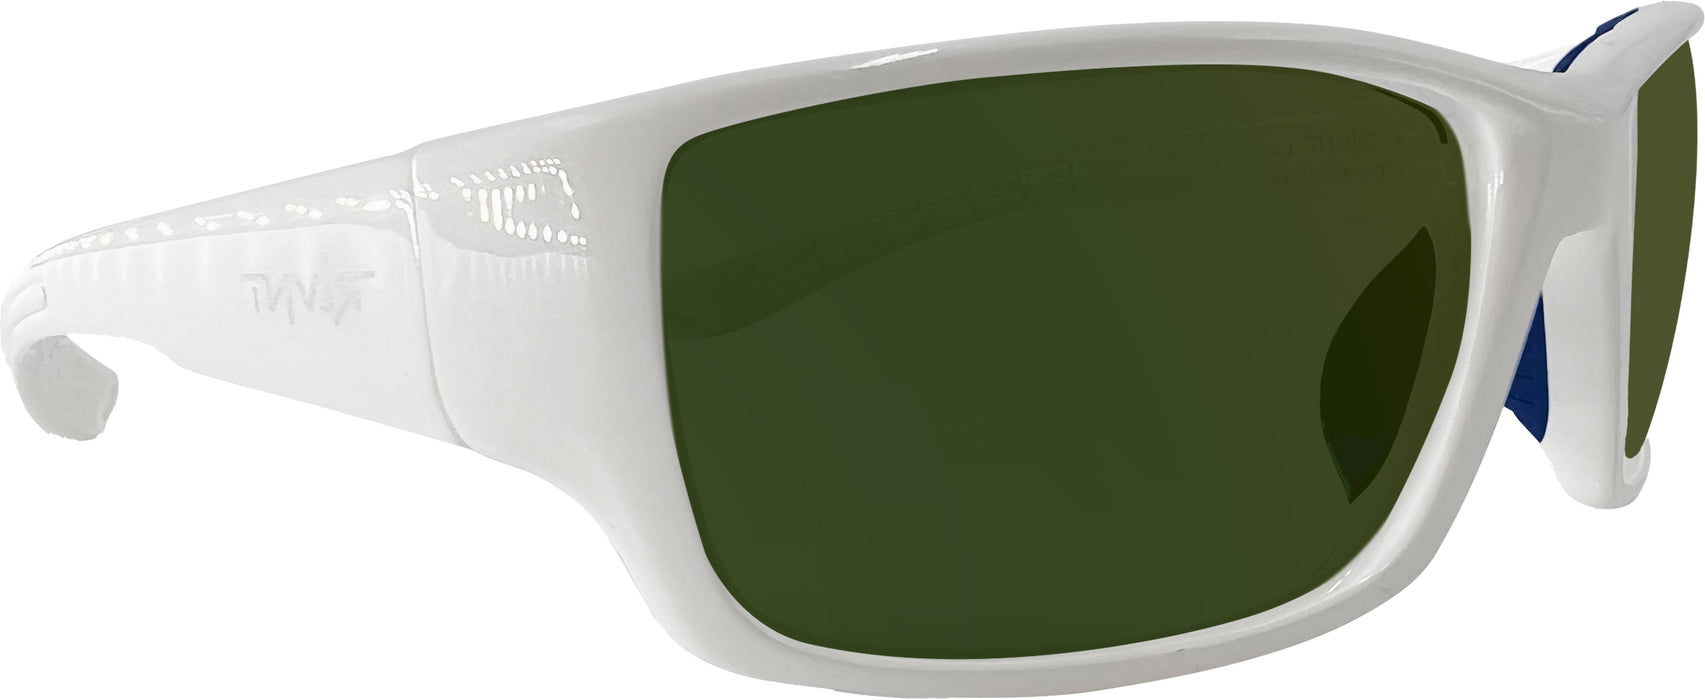 RLVNT Maverick Series Sunglasses